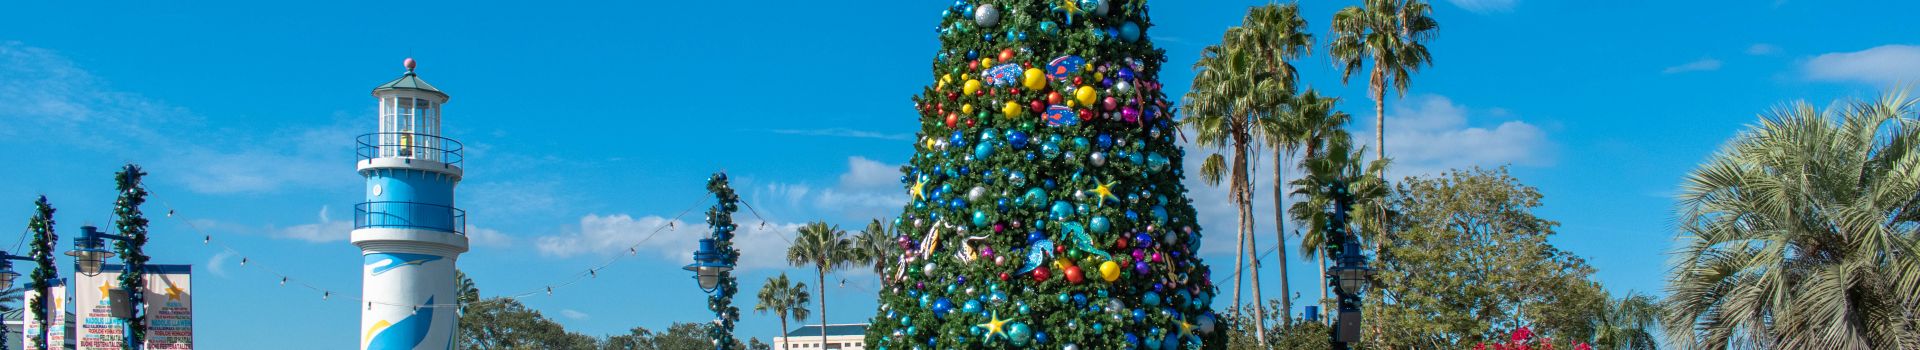 American Christmas holidays to Orlando with Cassidy Travel - Book Orlando holidays here - 2021 holidays to Orlando